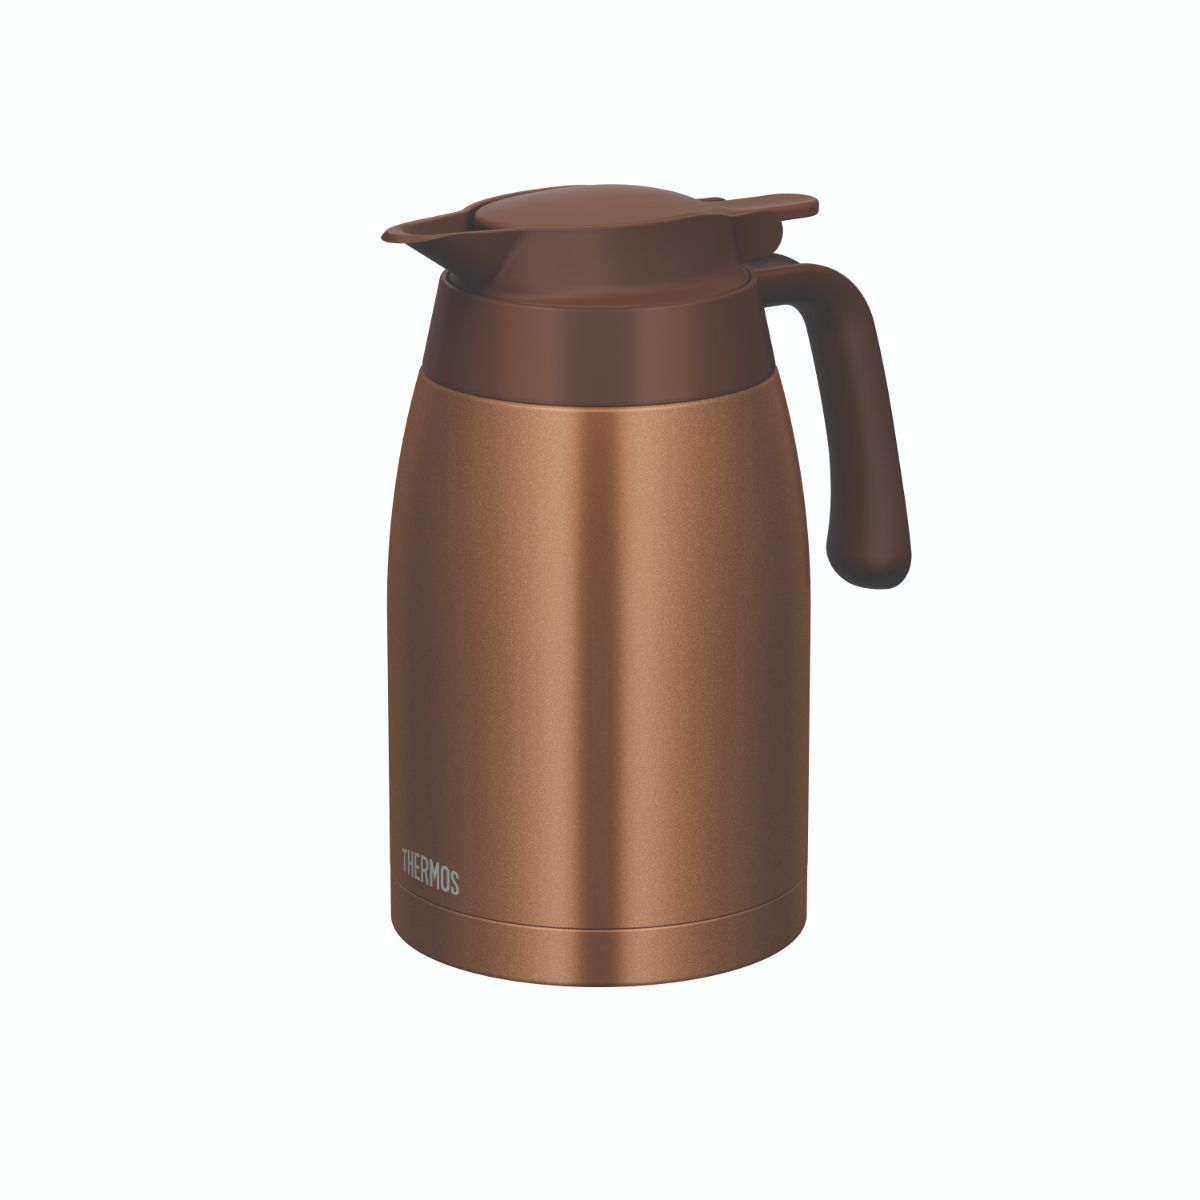 THERMOS ステンレスポット ブラウンゴールド 1.5L ステンレス 保温 保冷 丸洗イ可 軽量 コンパクト オ茶 コーヒー